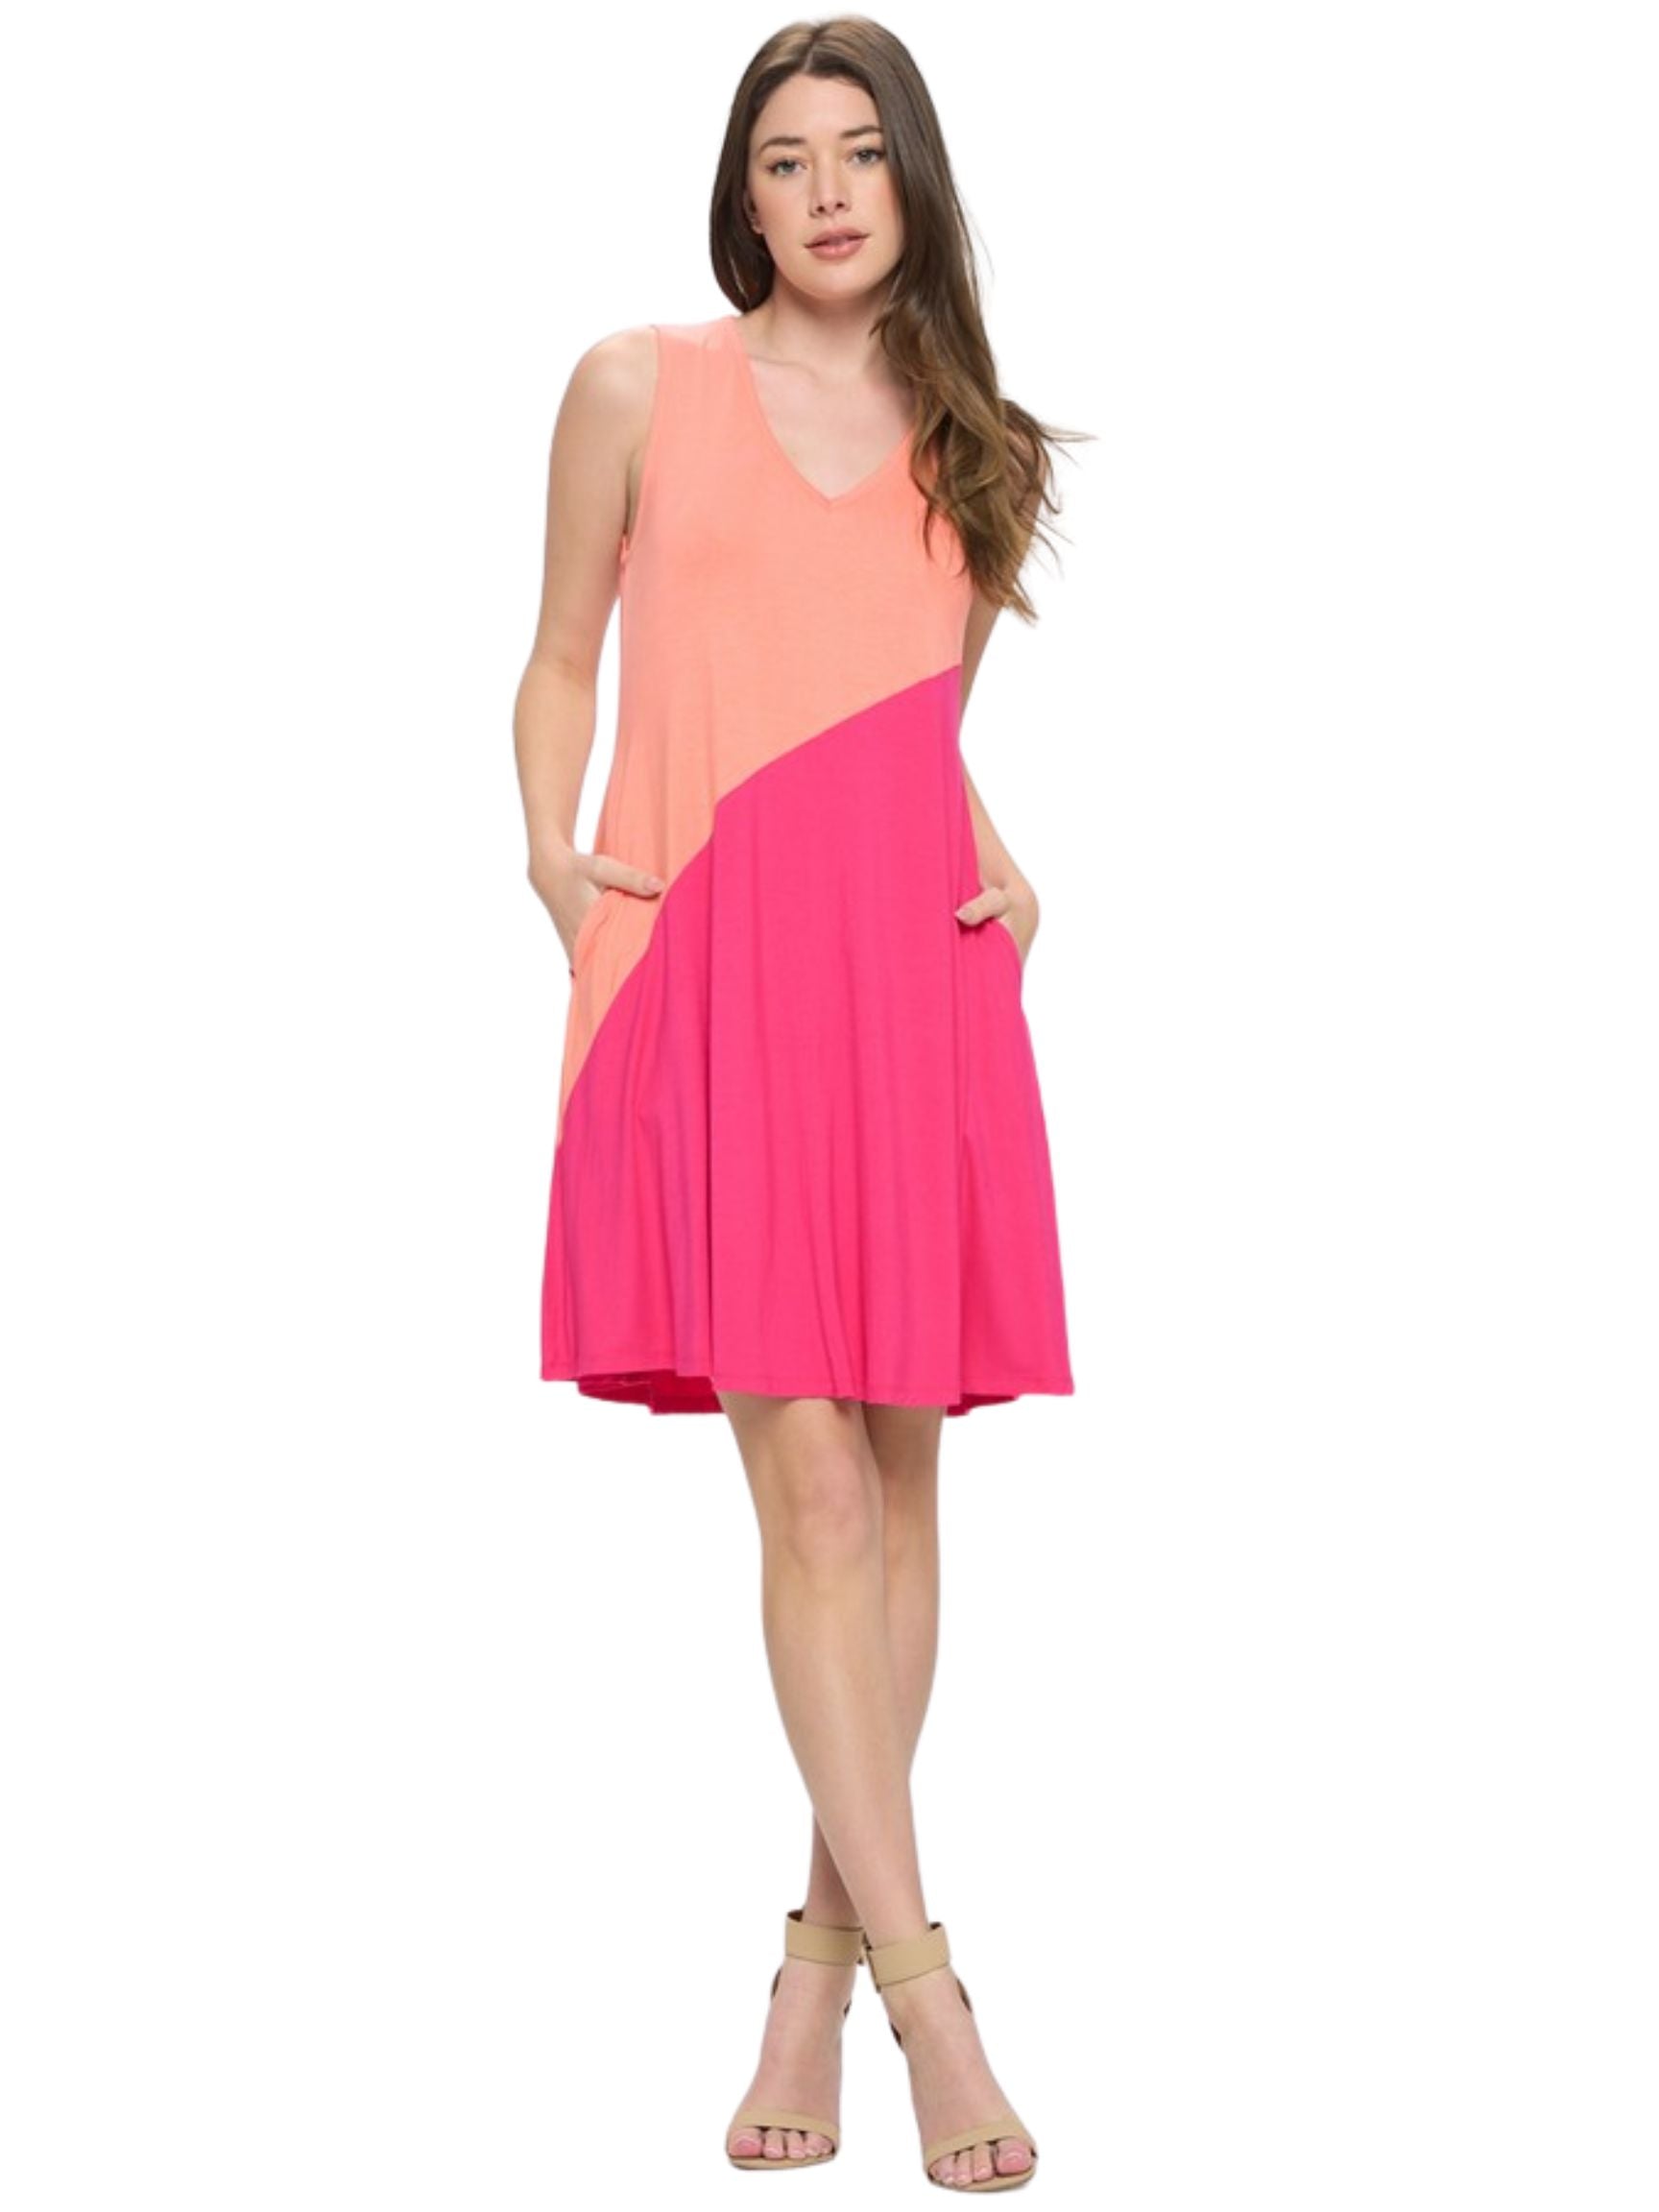 Diagonal Colorblocked Dress - Peach/Fuchsia